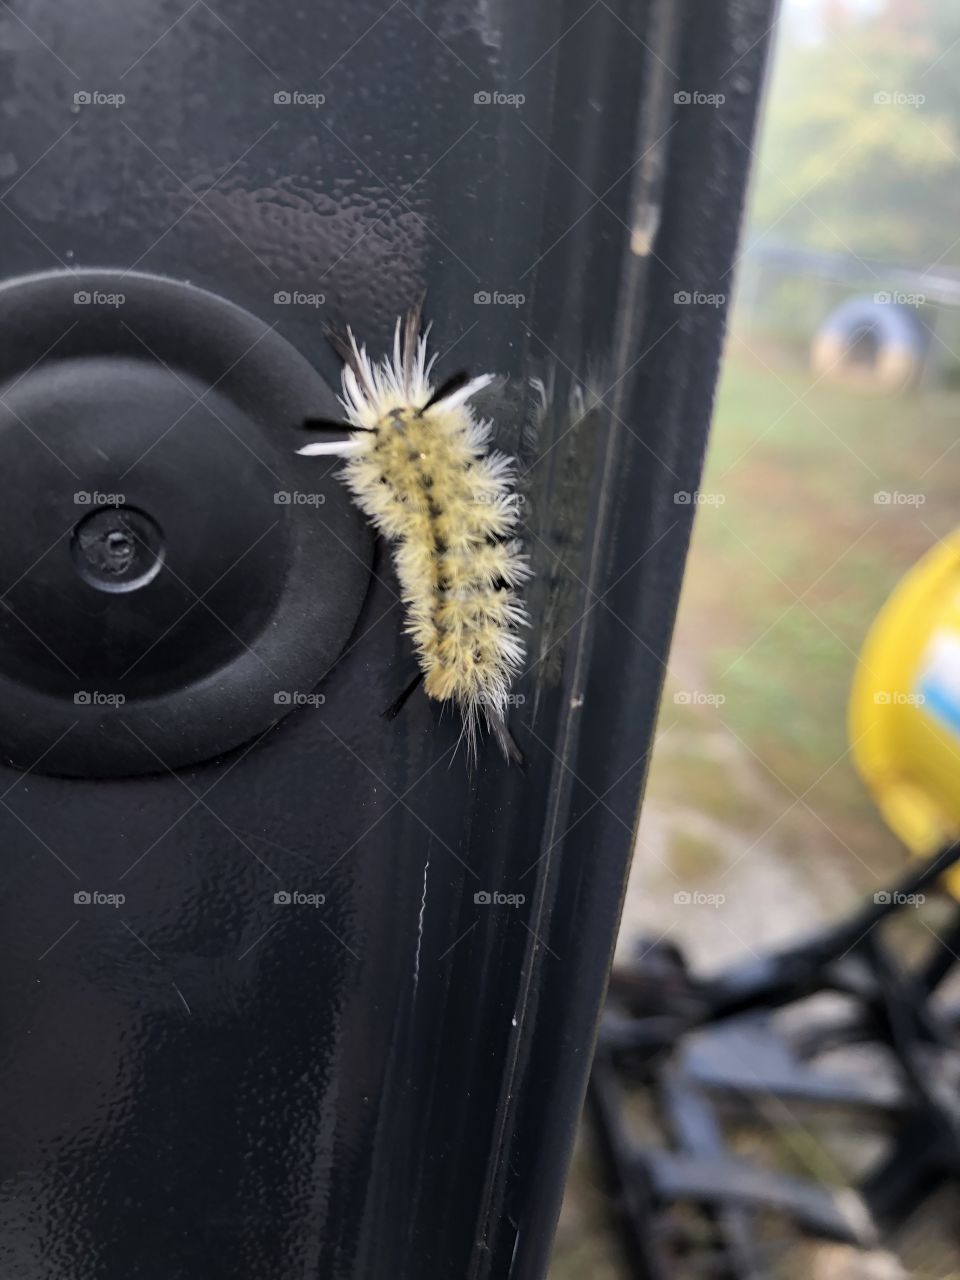 Caterpillar on car door